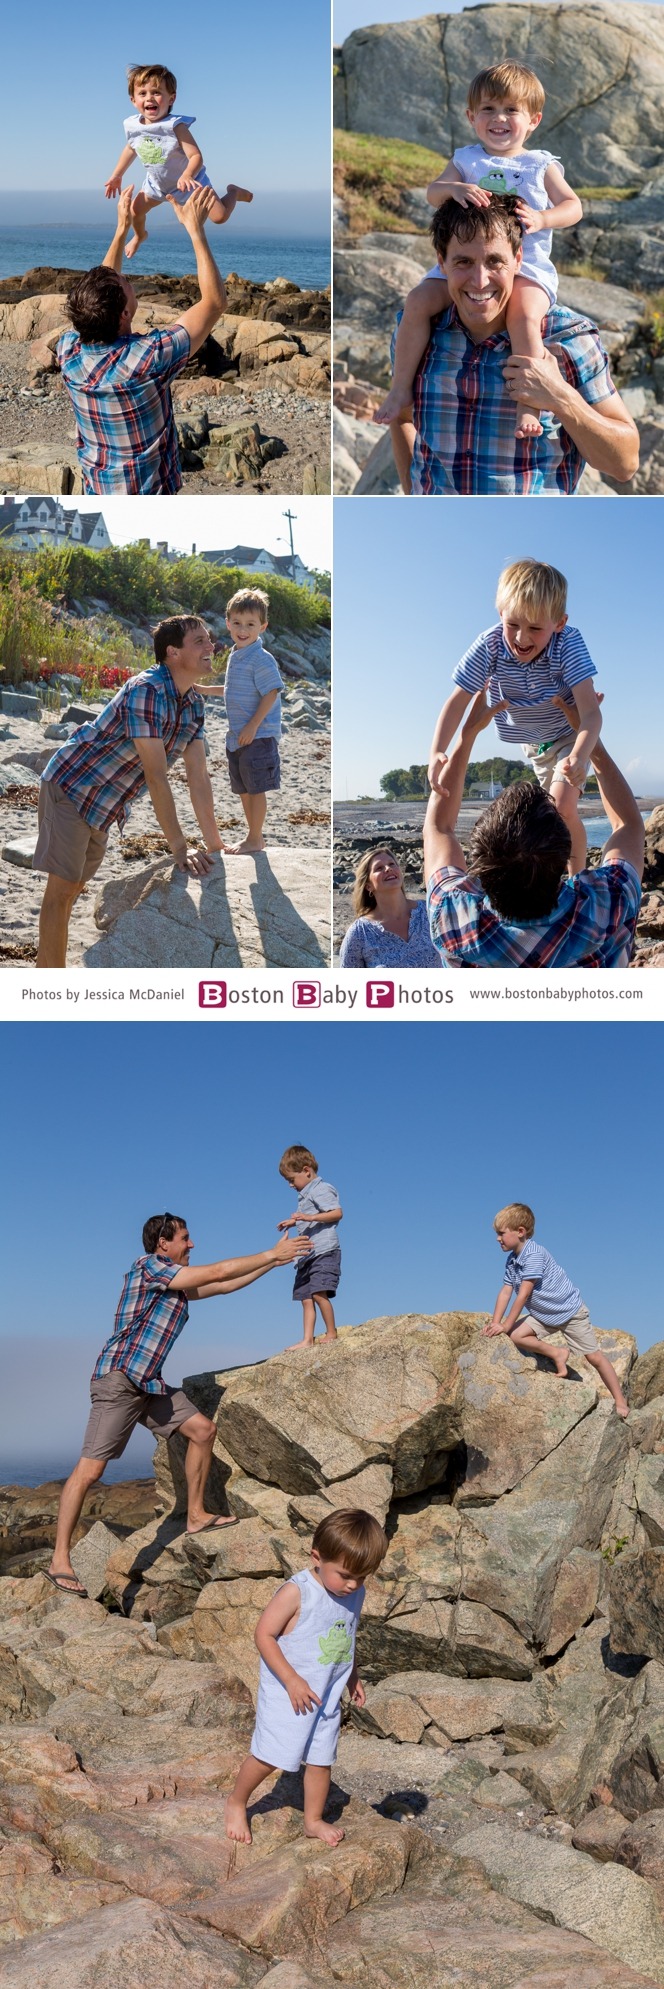 cohasset beach family photoshoot boston baby photos